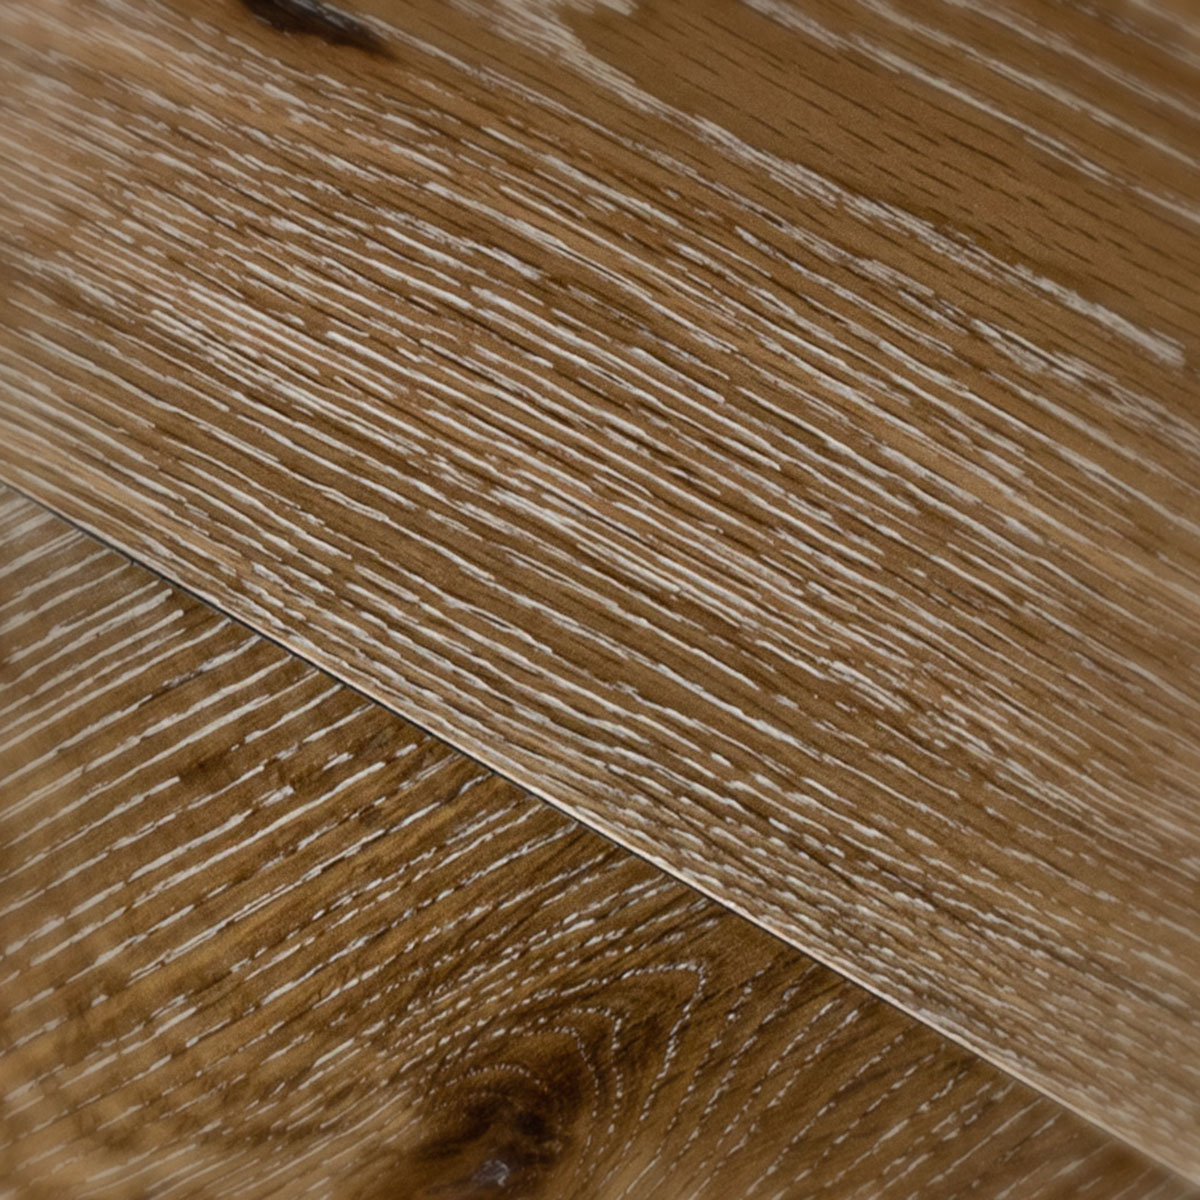 Morgan Way - Geometric Diamond Shaped Wood Floor close-up